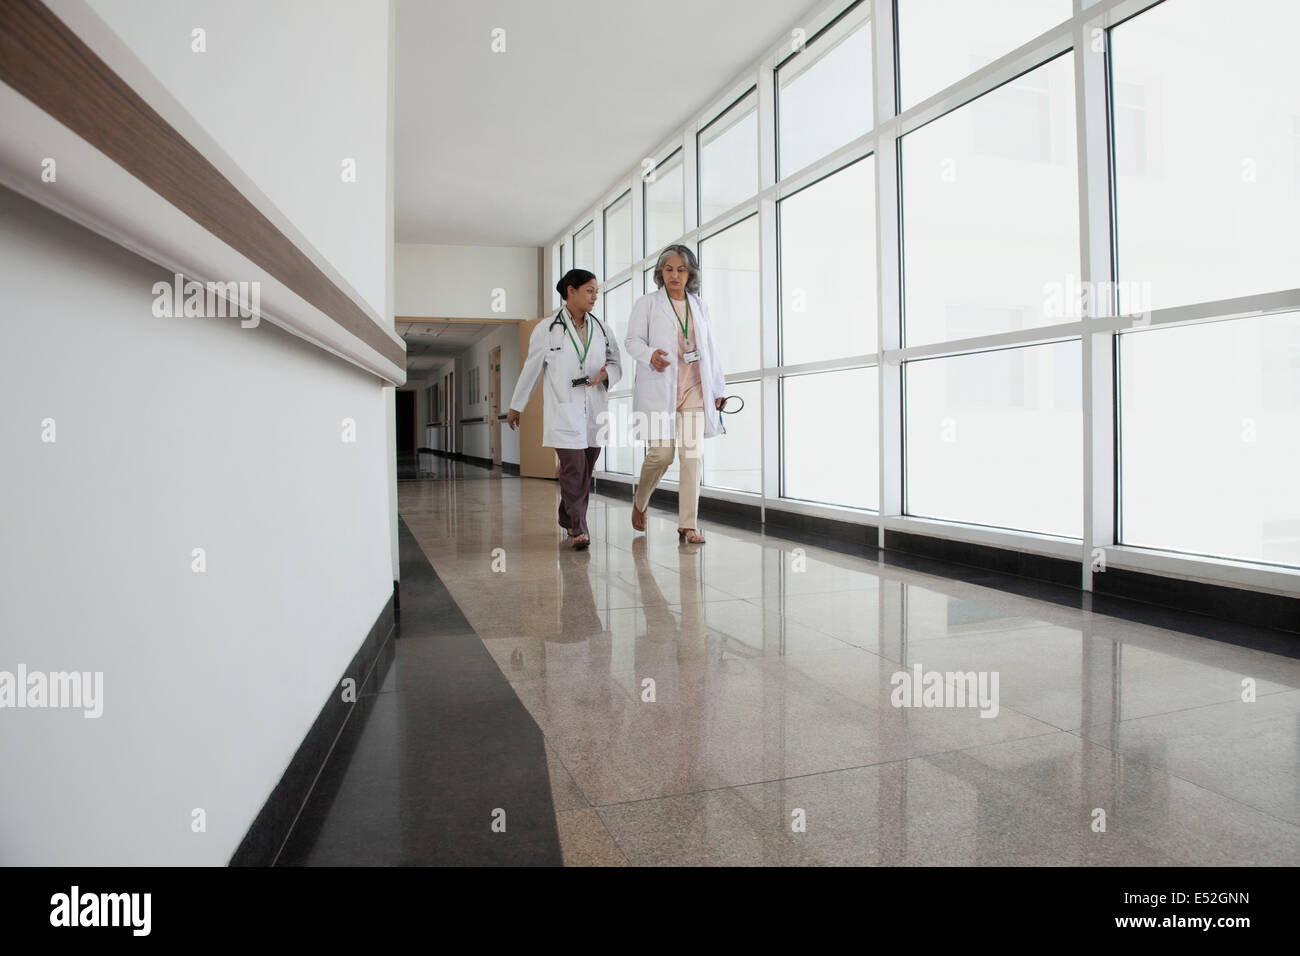 Zwei Ärzte in Diskussion Korridor hinunter Stockfoto